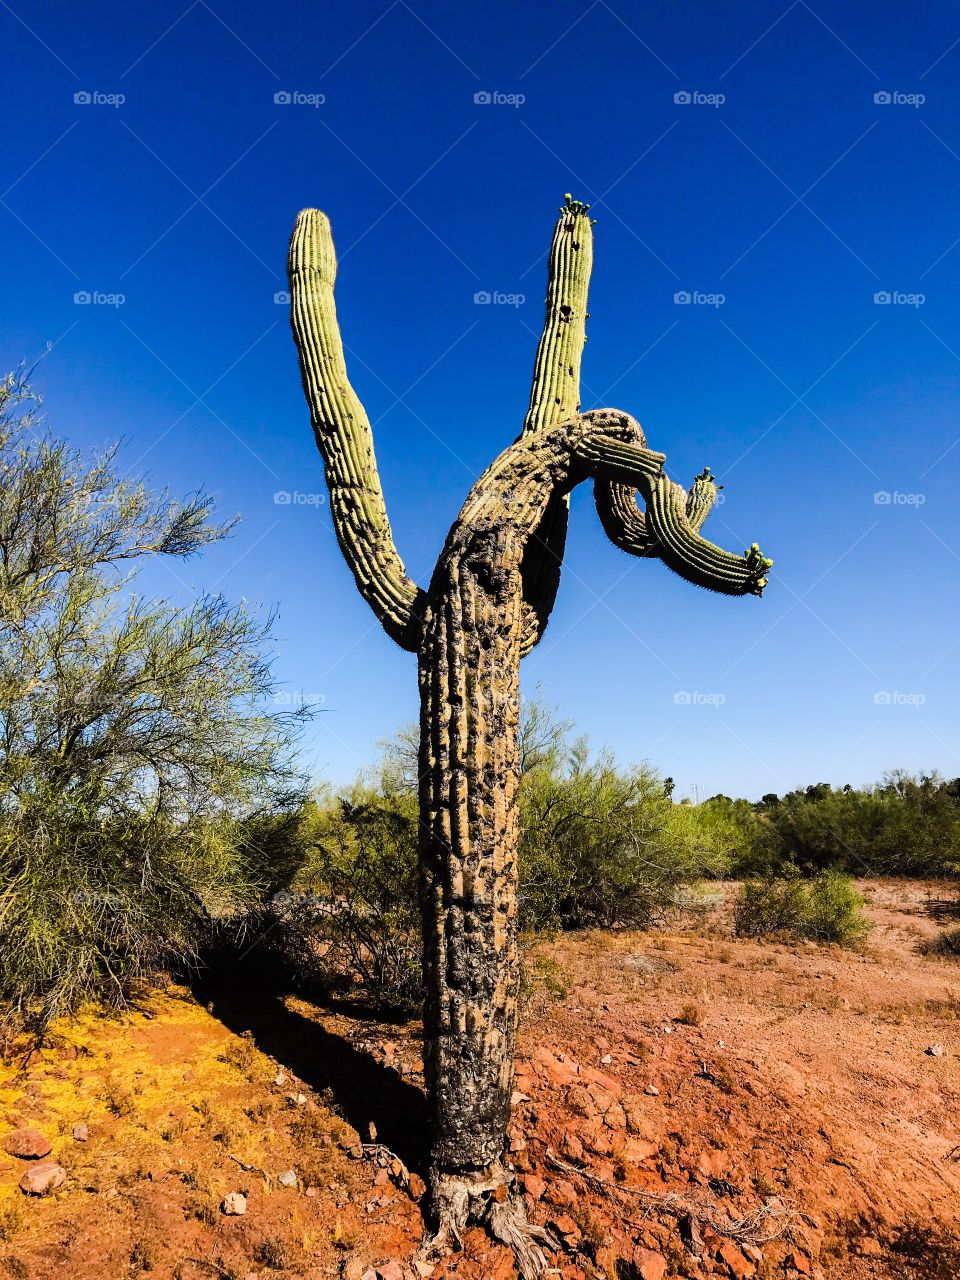 Giant cactus in Arizona desert